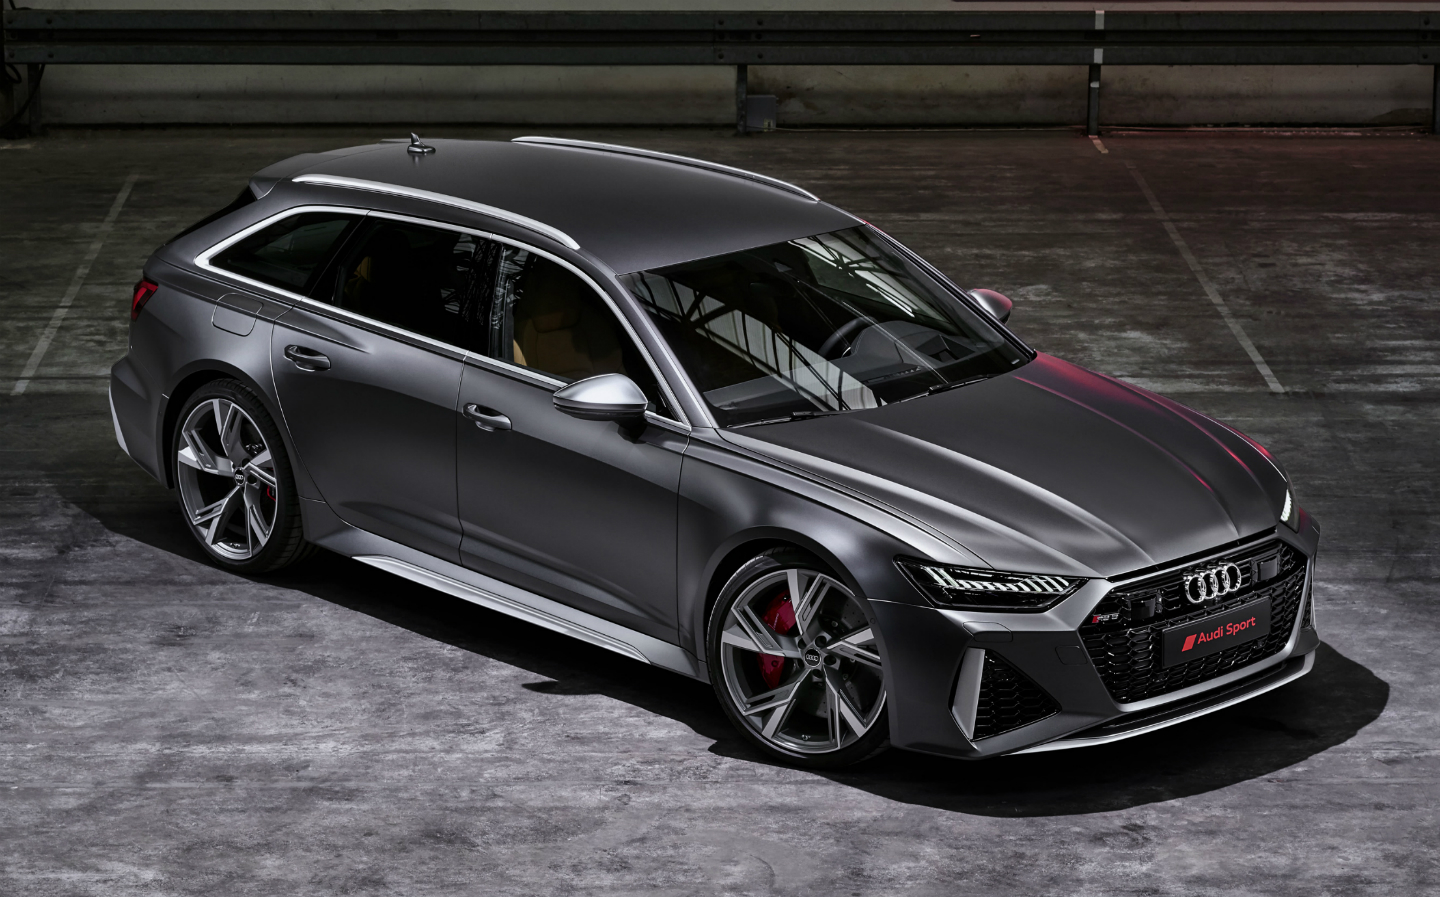 https://www.driving.co.uk/wp-content/uploads/sites/5/2019/08/2019-Audi-RS6-Avant-Reveal-05.jpg